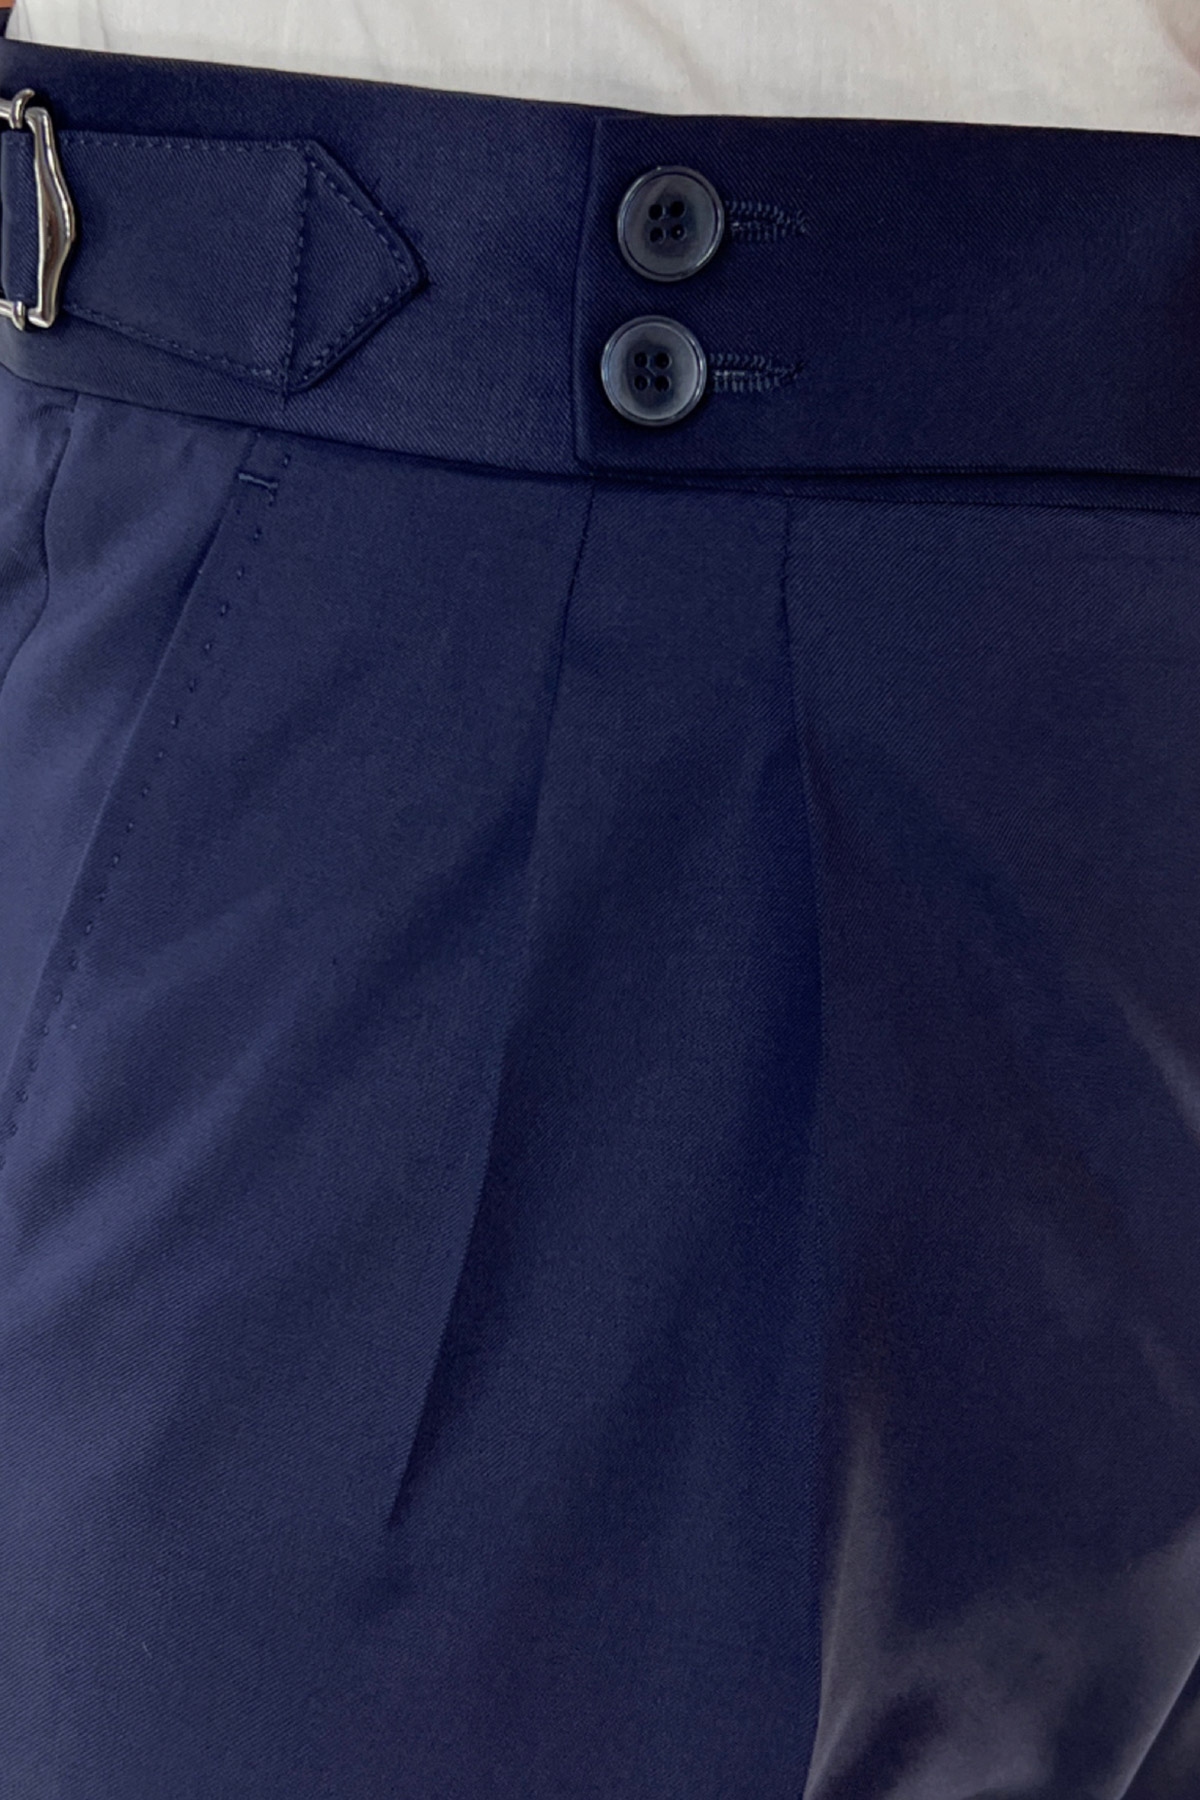 Pantalone uomo navy blu vita alta doppia pinces in fresco lana super 130's Vitale Barberis Canonico